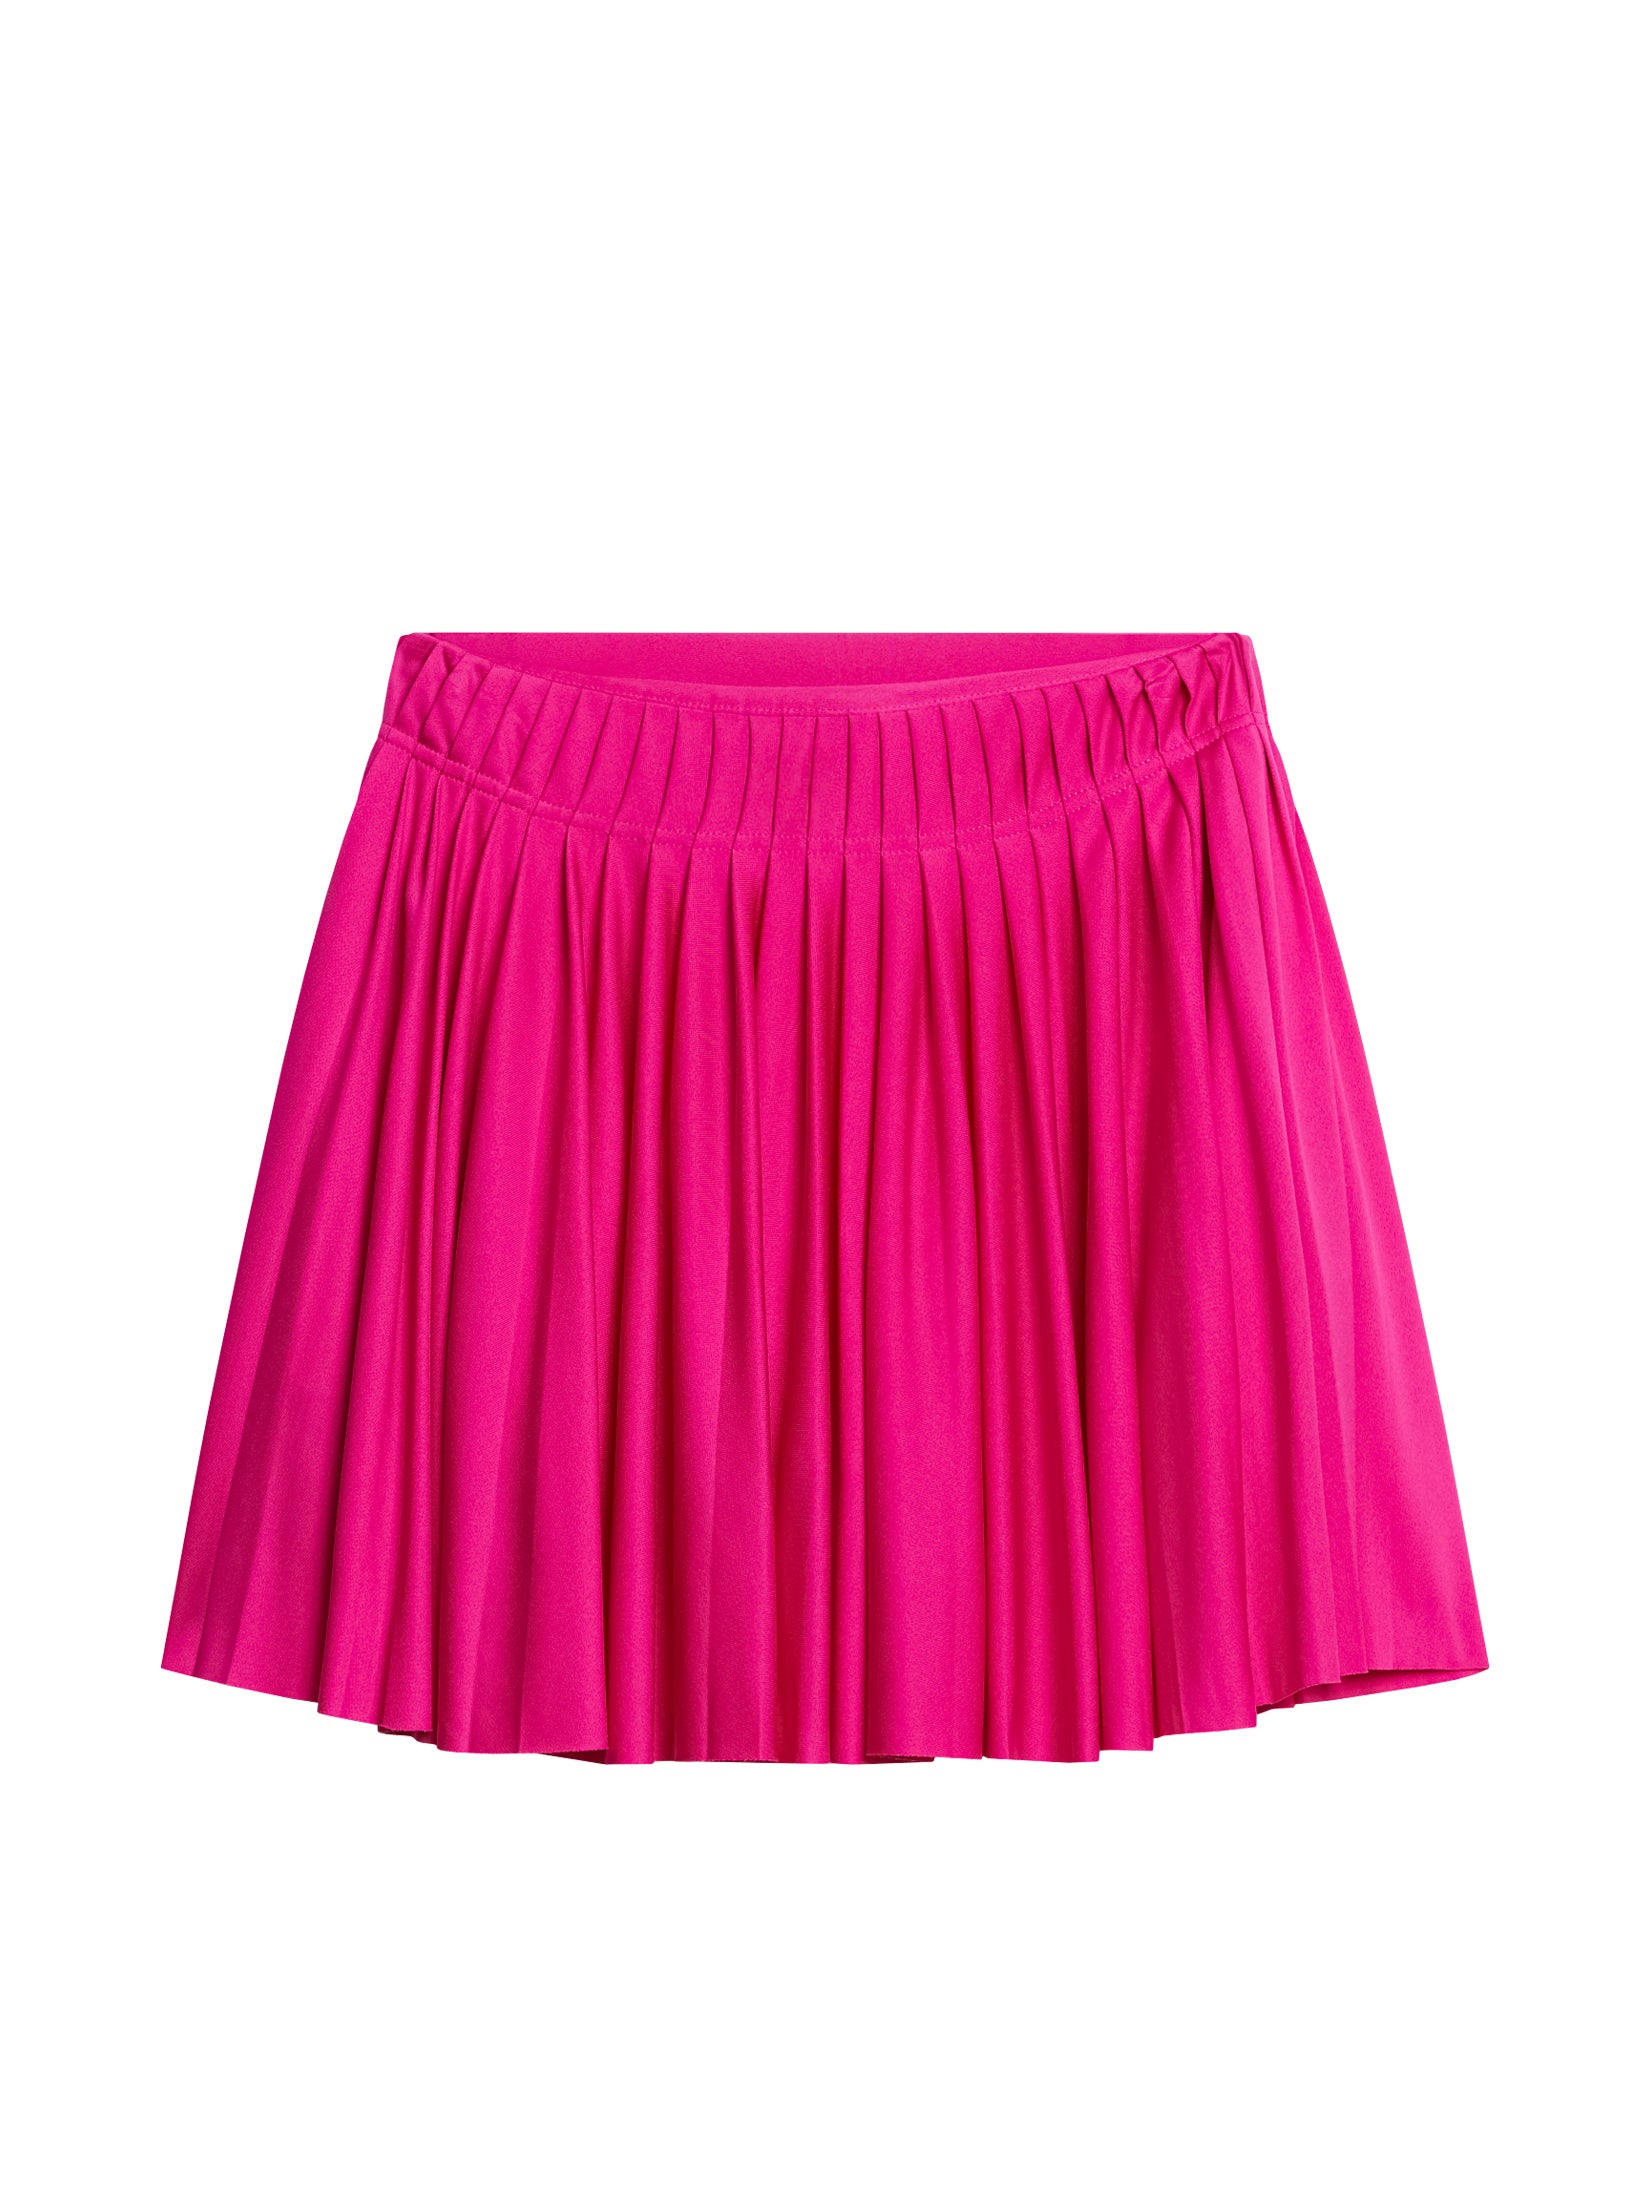 Gayle Skirt